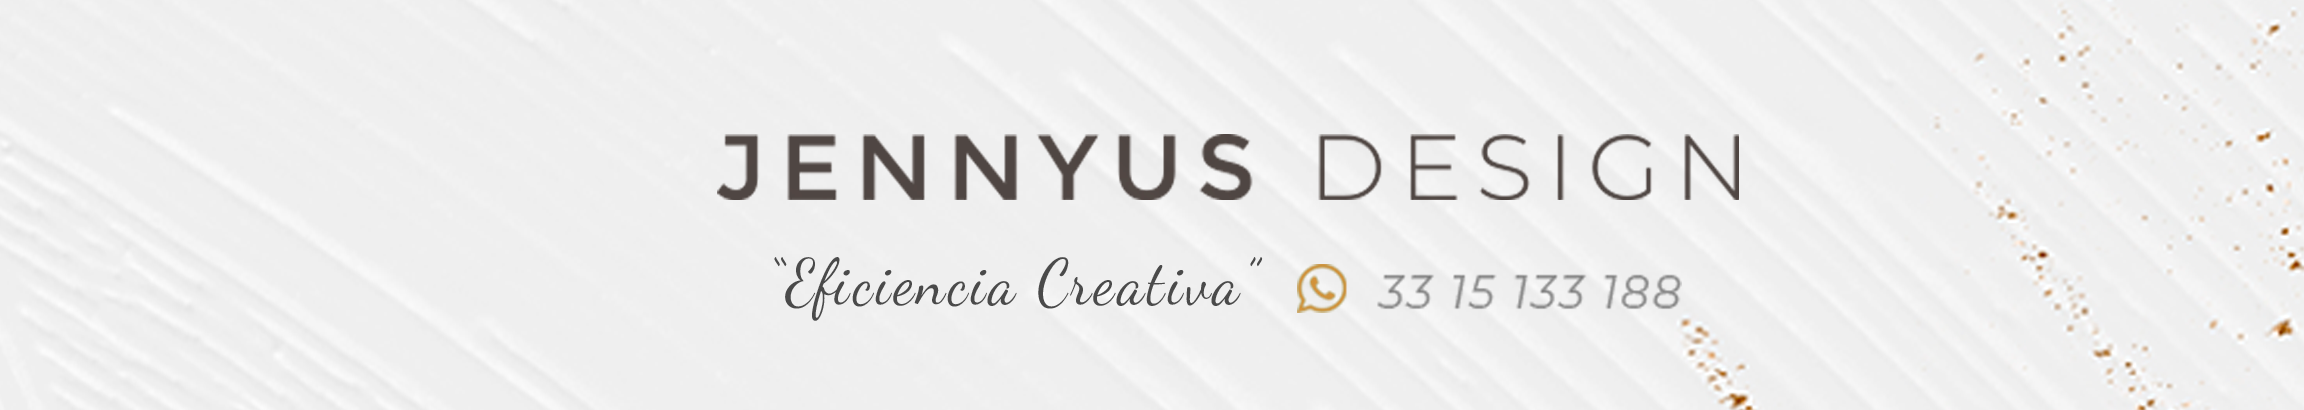 Jennyus Design's profile banner